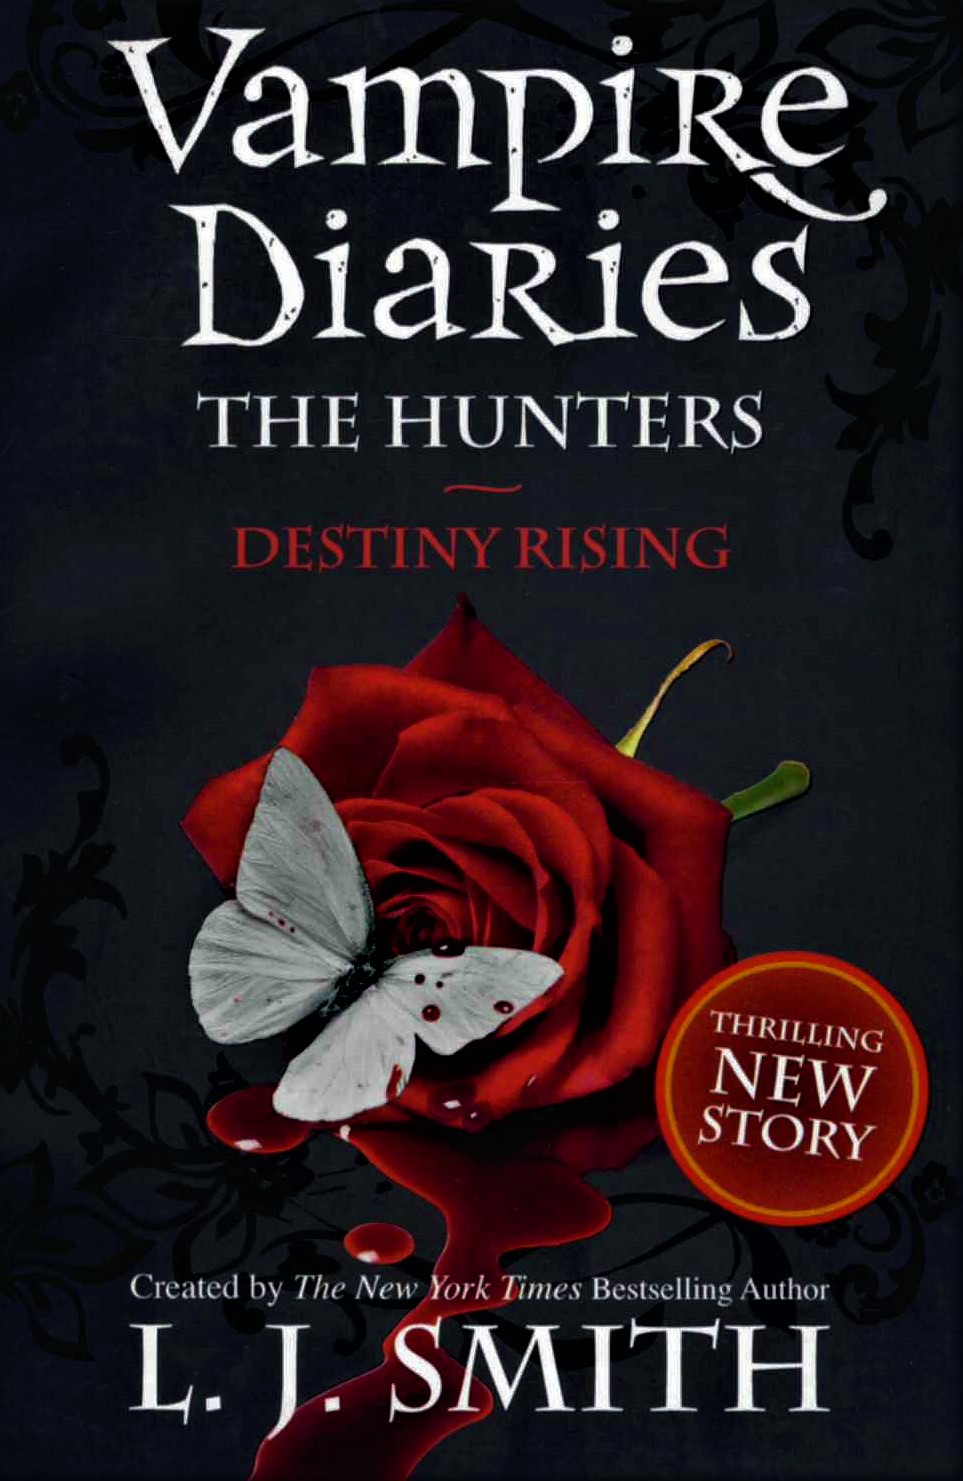 The Vampire Diaries: The Hunters. Destiny Rising